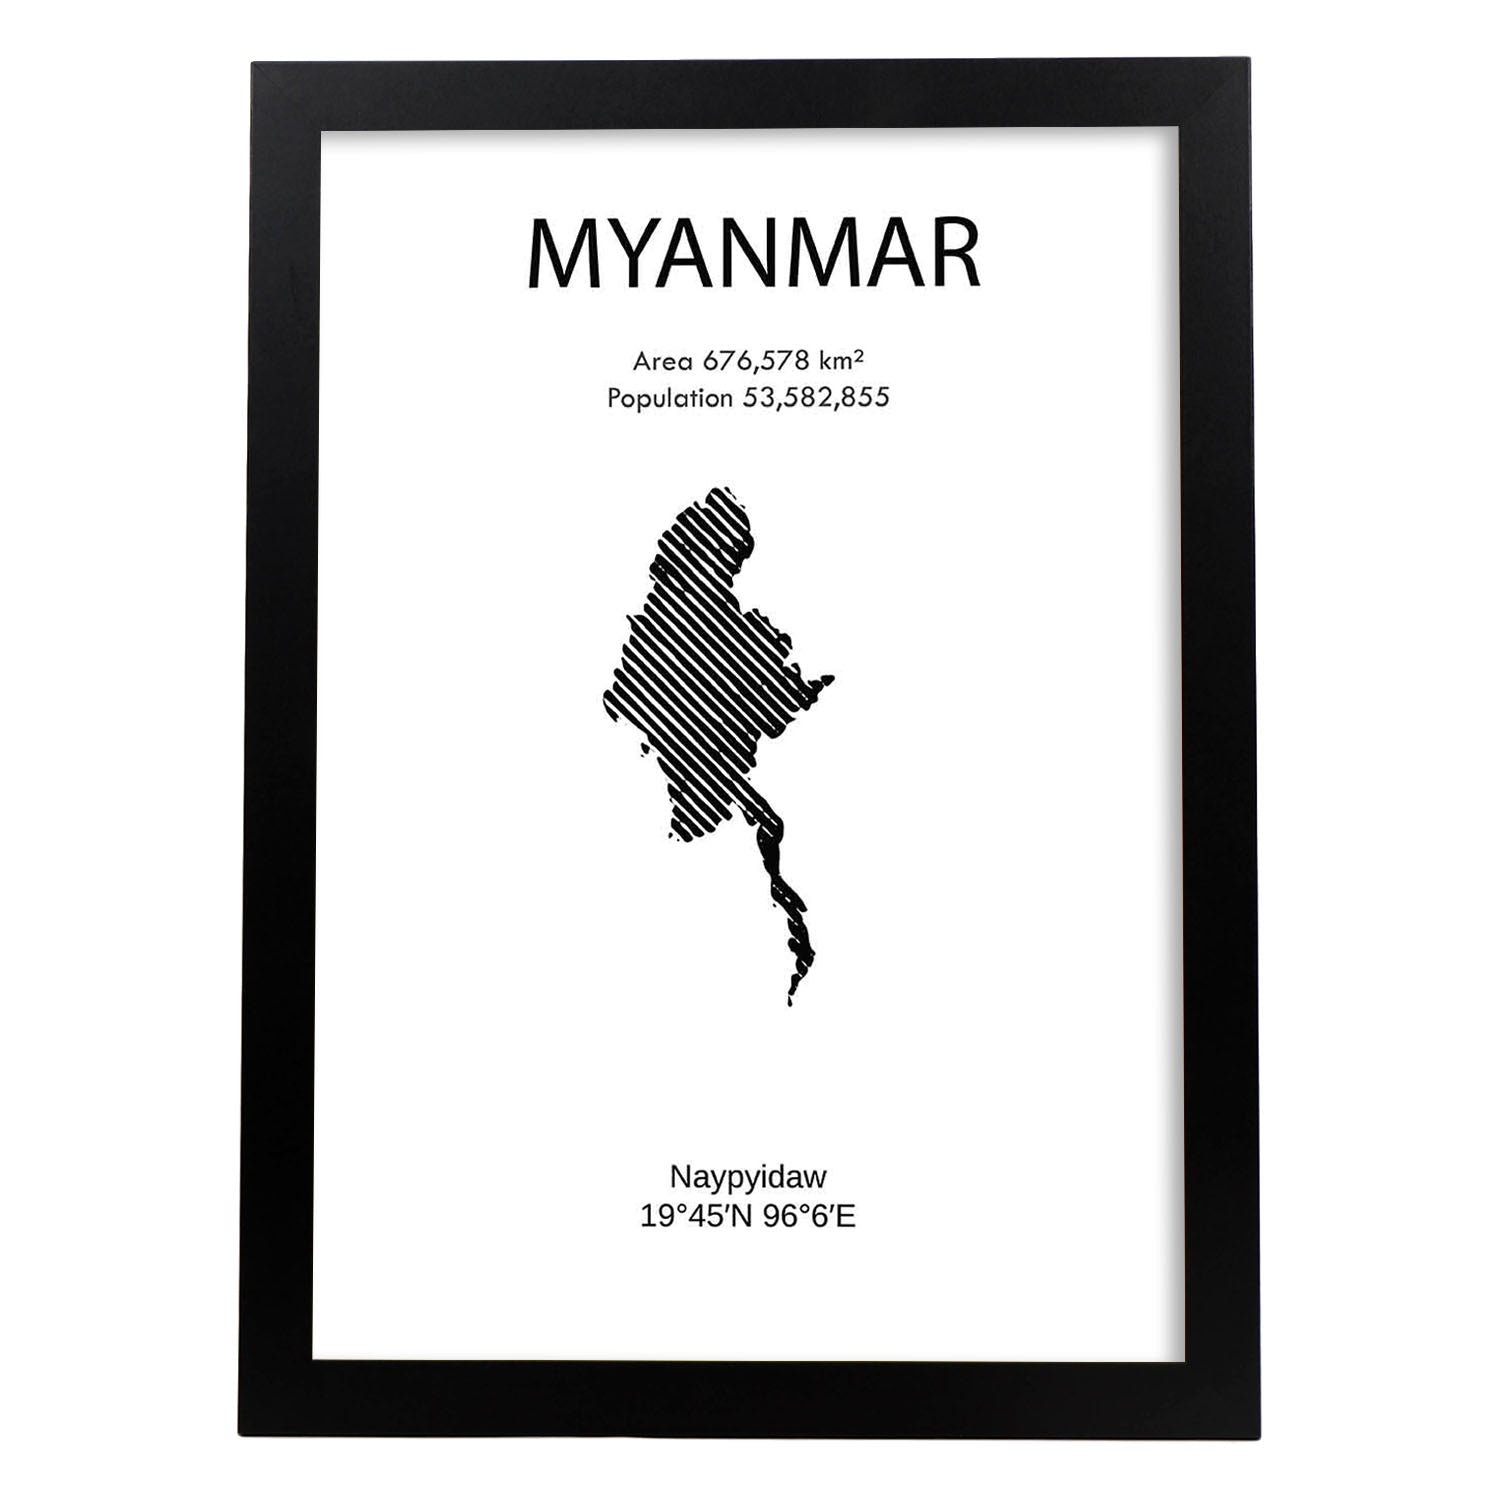 Poster de Myanmar. Láminas de paises y continentes del mundo.-Artwork-Nacnic-A4-Marco Negro-Nacnic Estudio SL